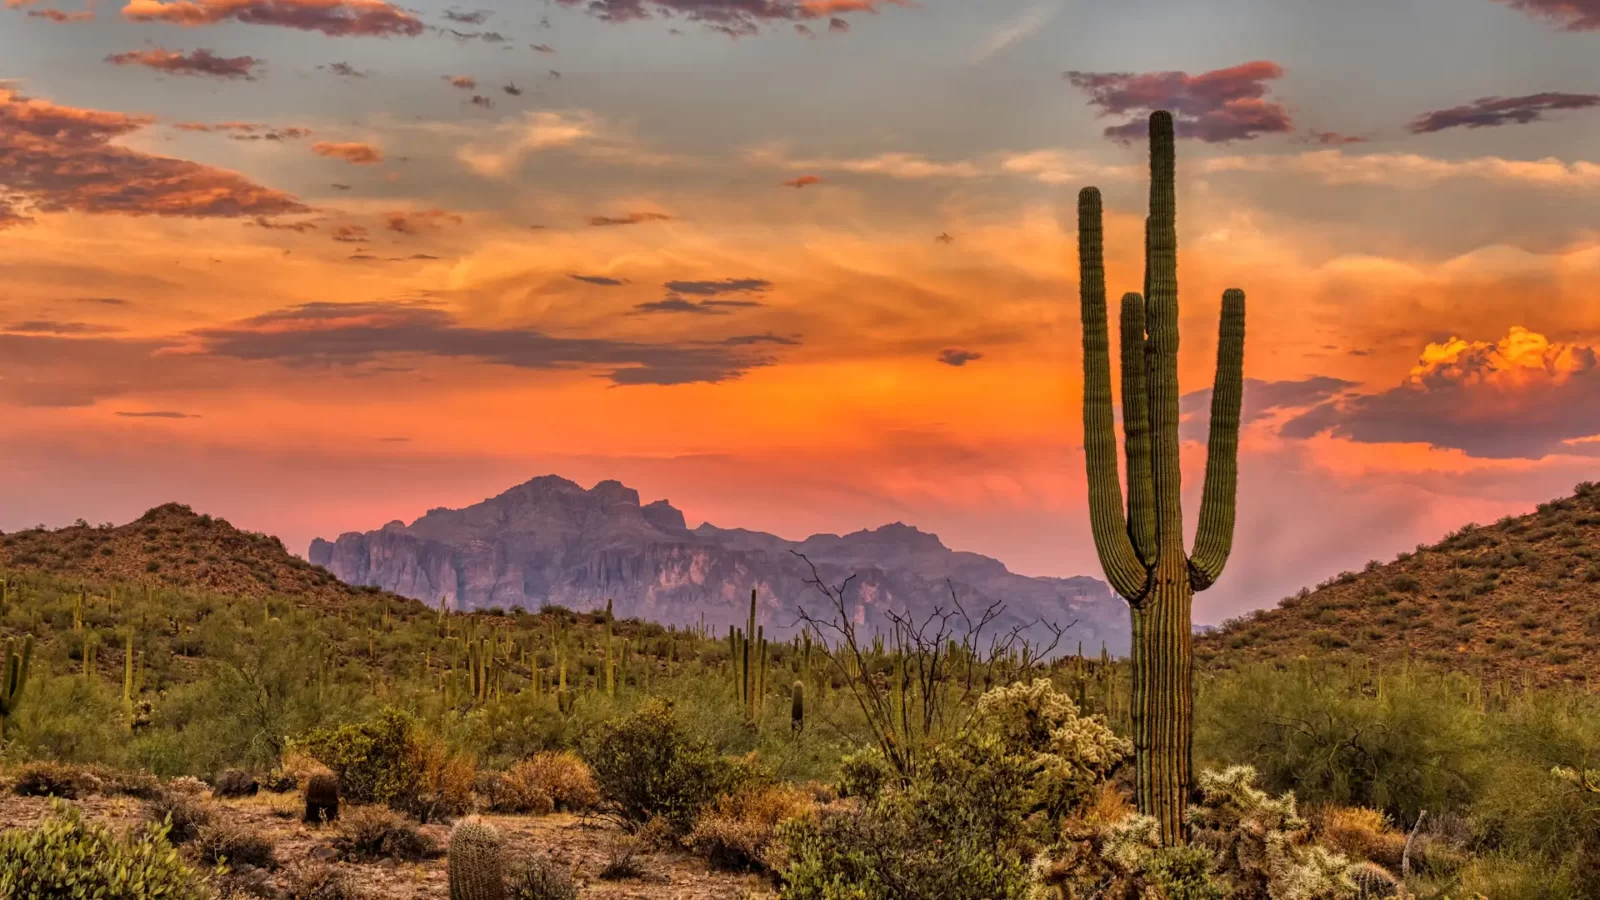 Cities At Sunset Quiz Sunset in the Sonoran Desert near Phoenix, Arizona, USA